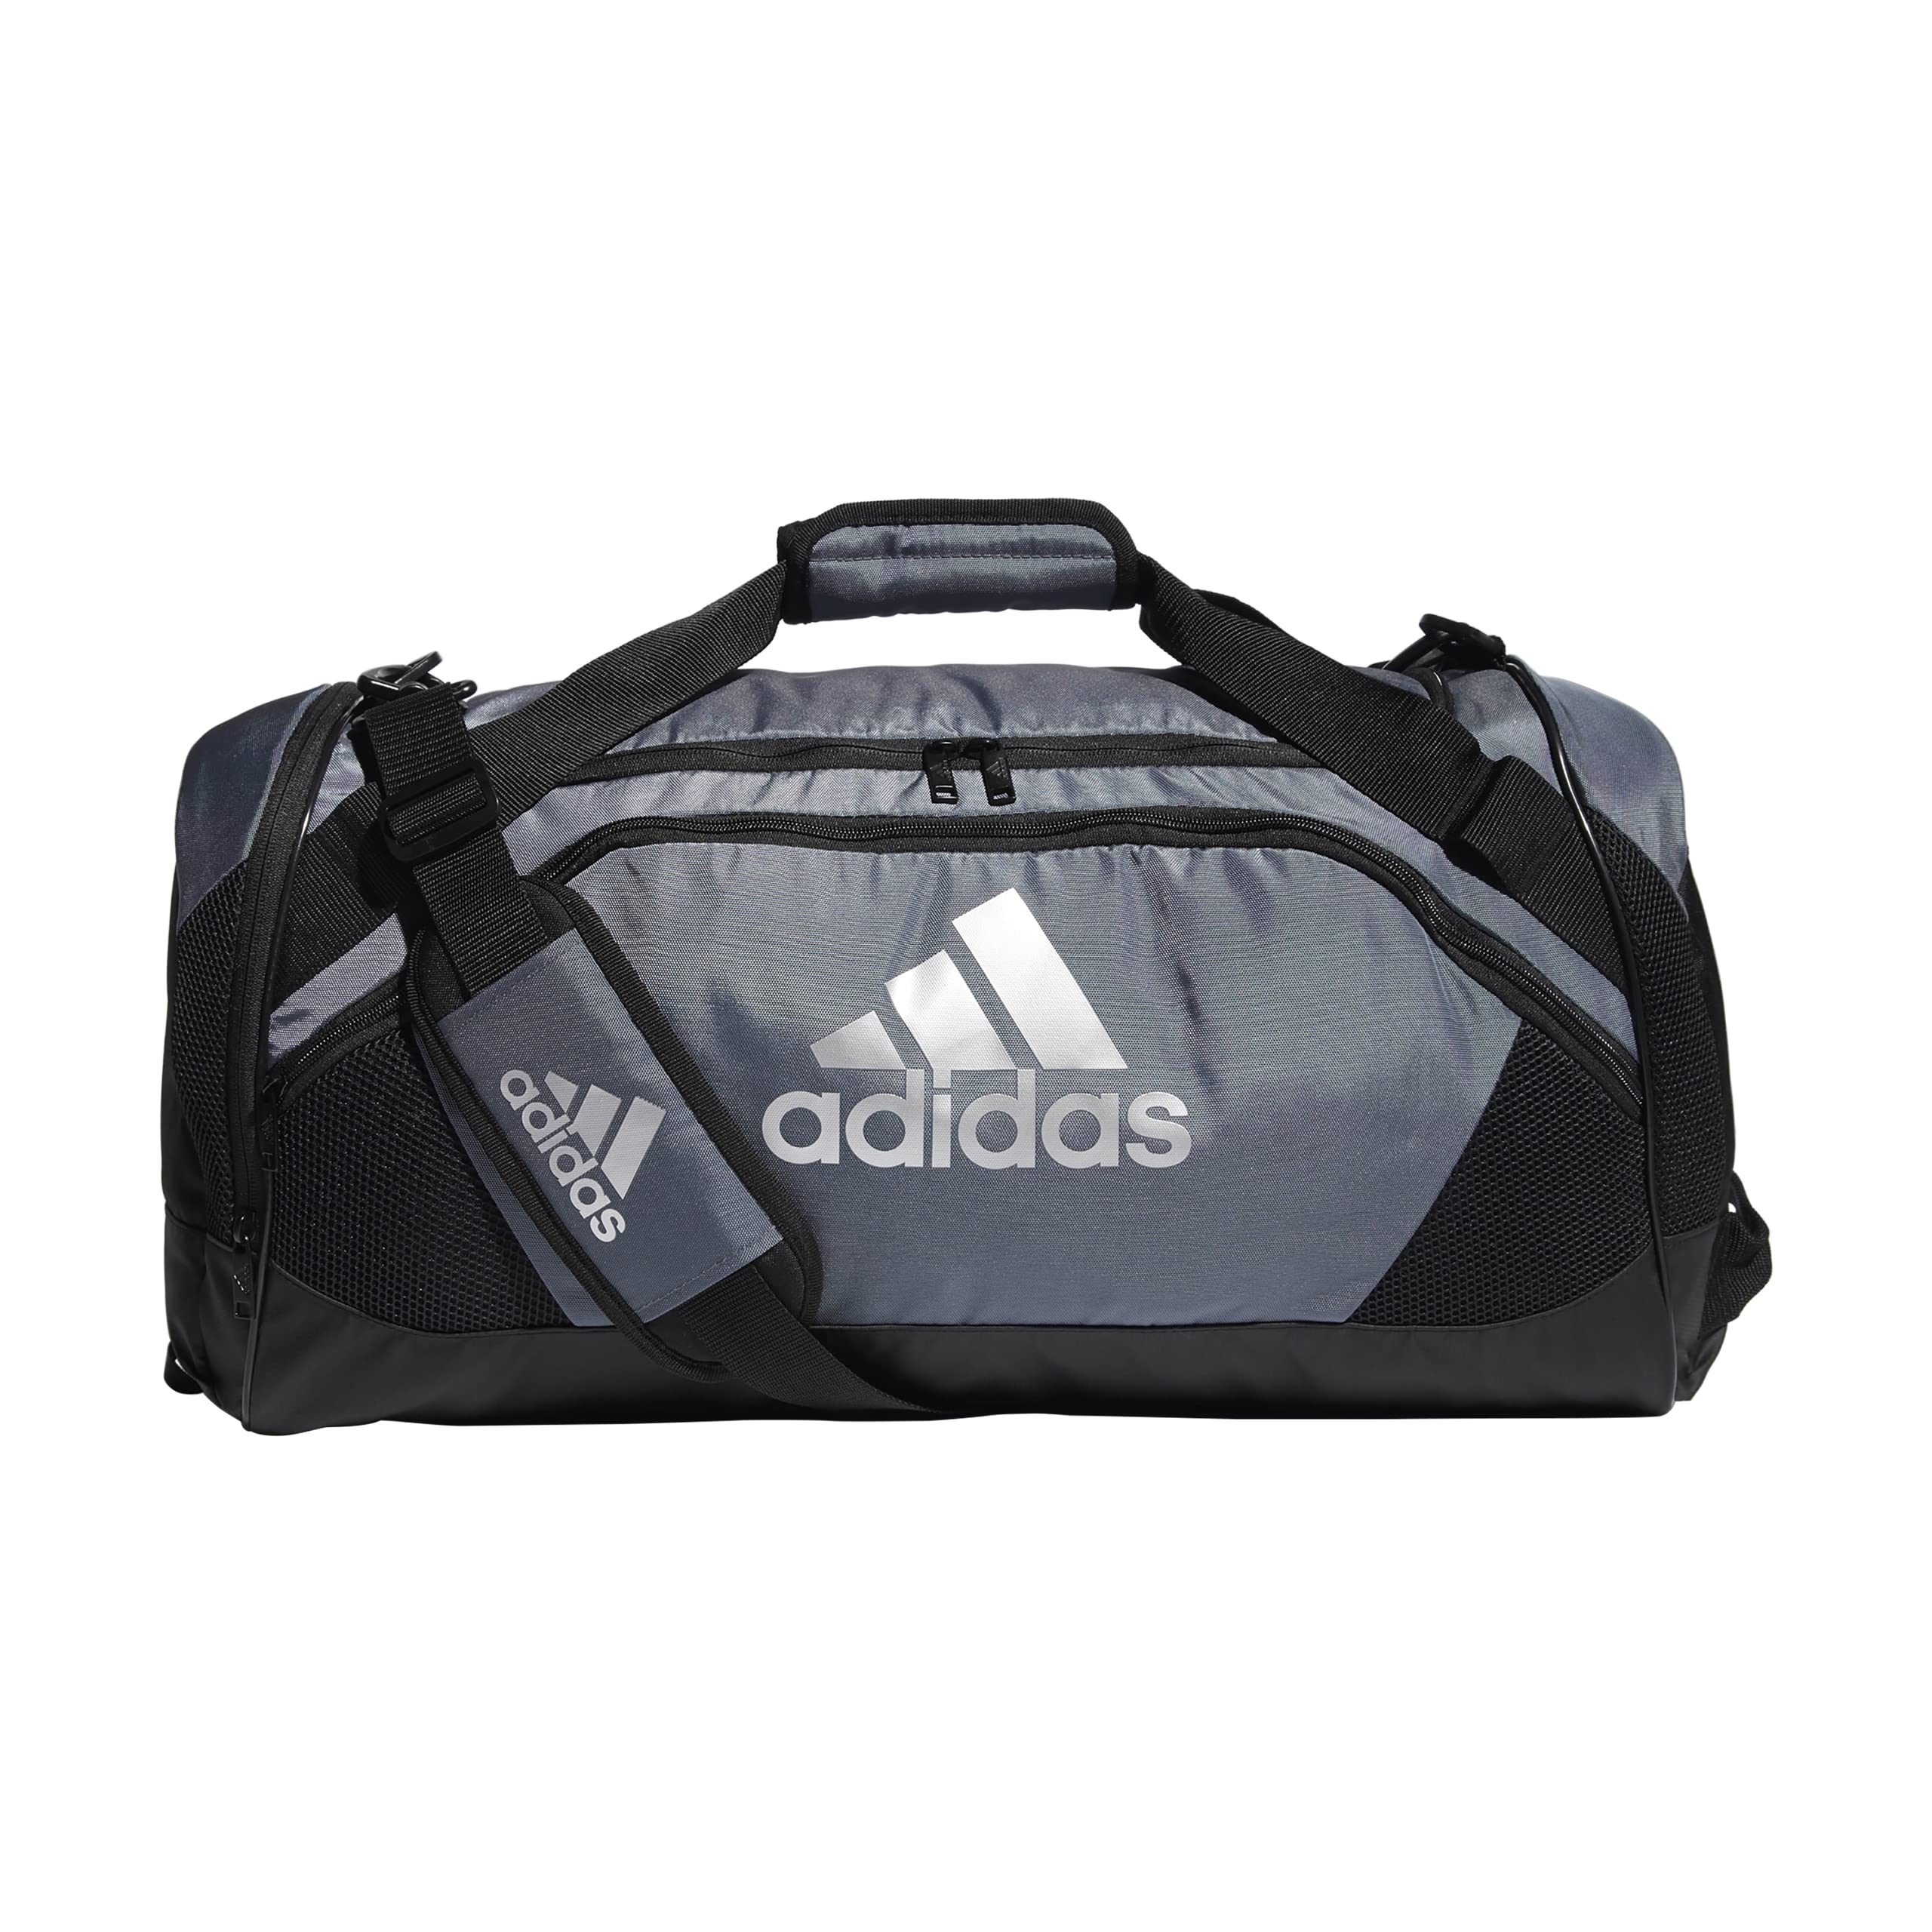 Adidas Team wheel XL bag black